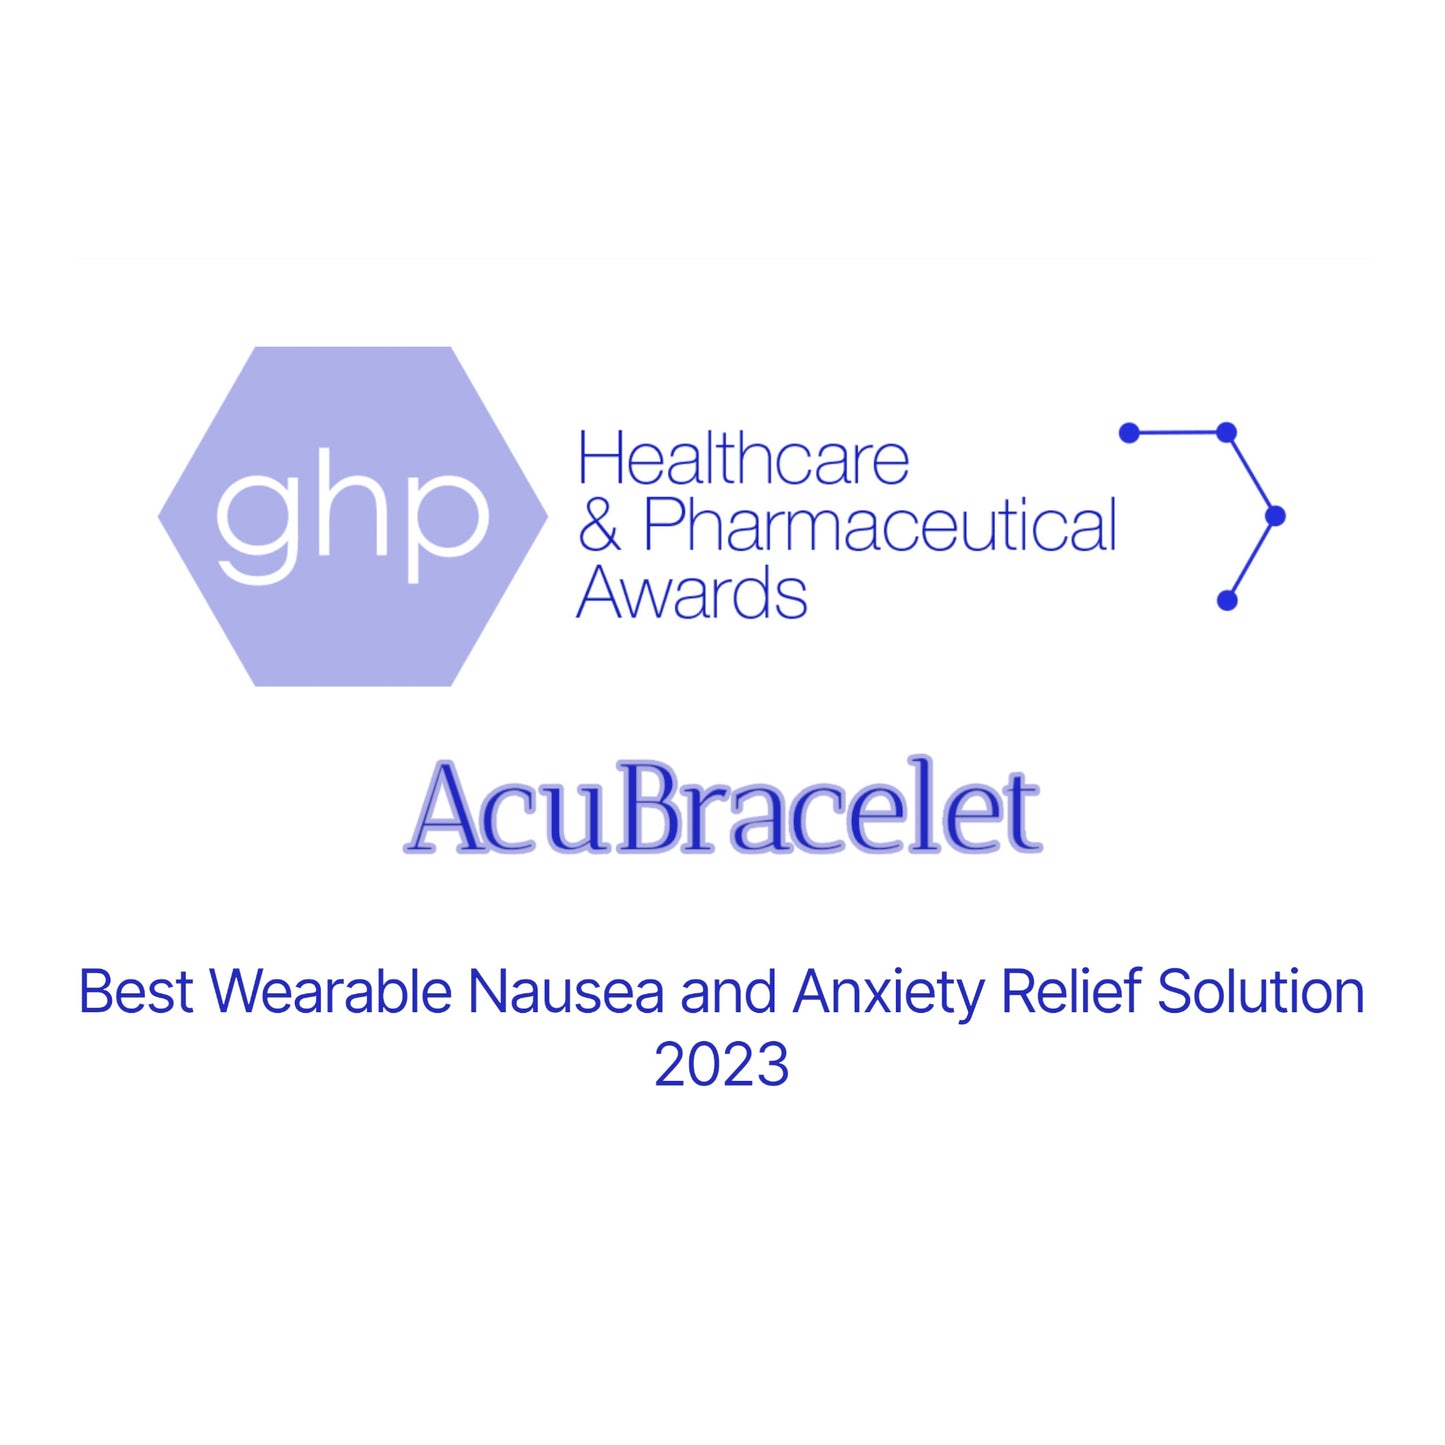 AcuBalance Bracelet-Calming Stress Relief-Vertigo-Tension-Comfortable Acupressure Band-10+ Colors.